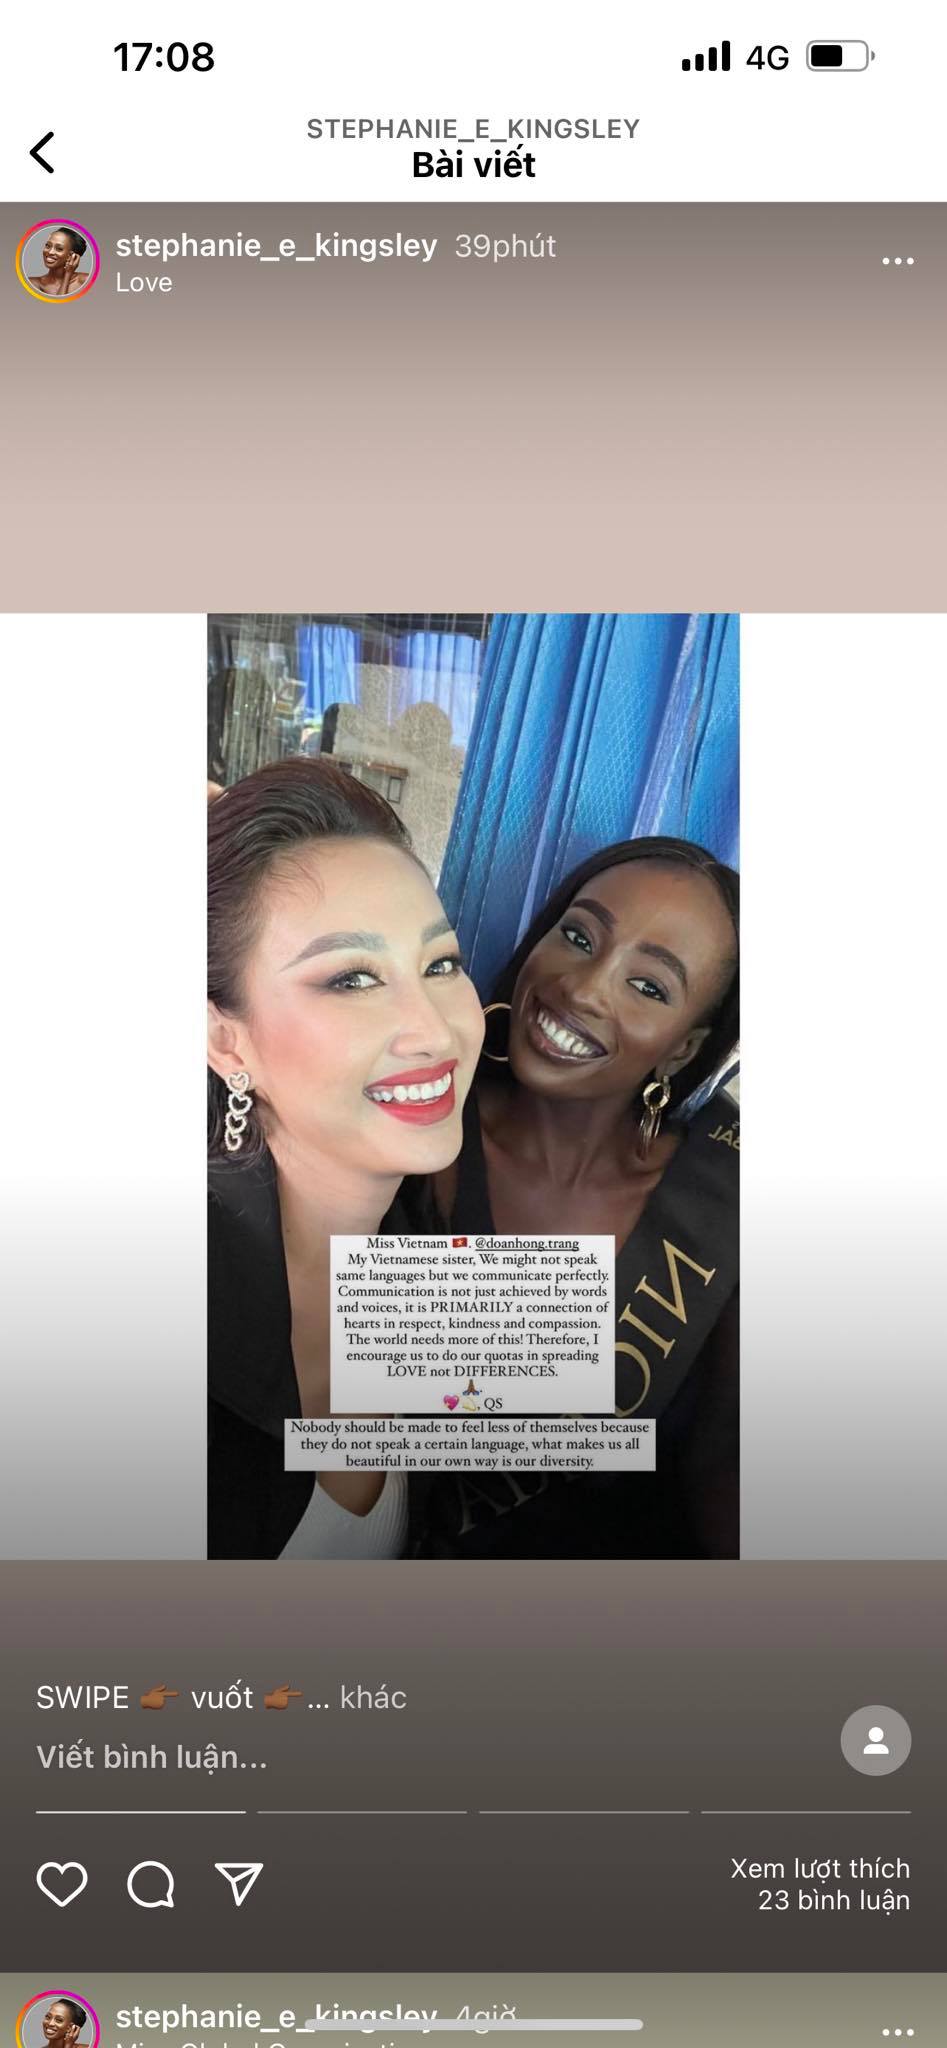 Doan Hong Trang cut the skirt to help Miss Global 2022 contestant, beautiful Nigerian, Kazakh beauties show compliments - Photo 3.